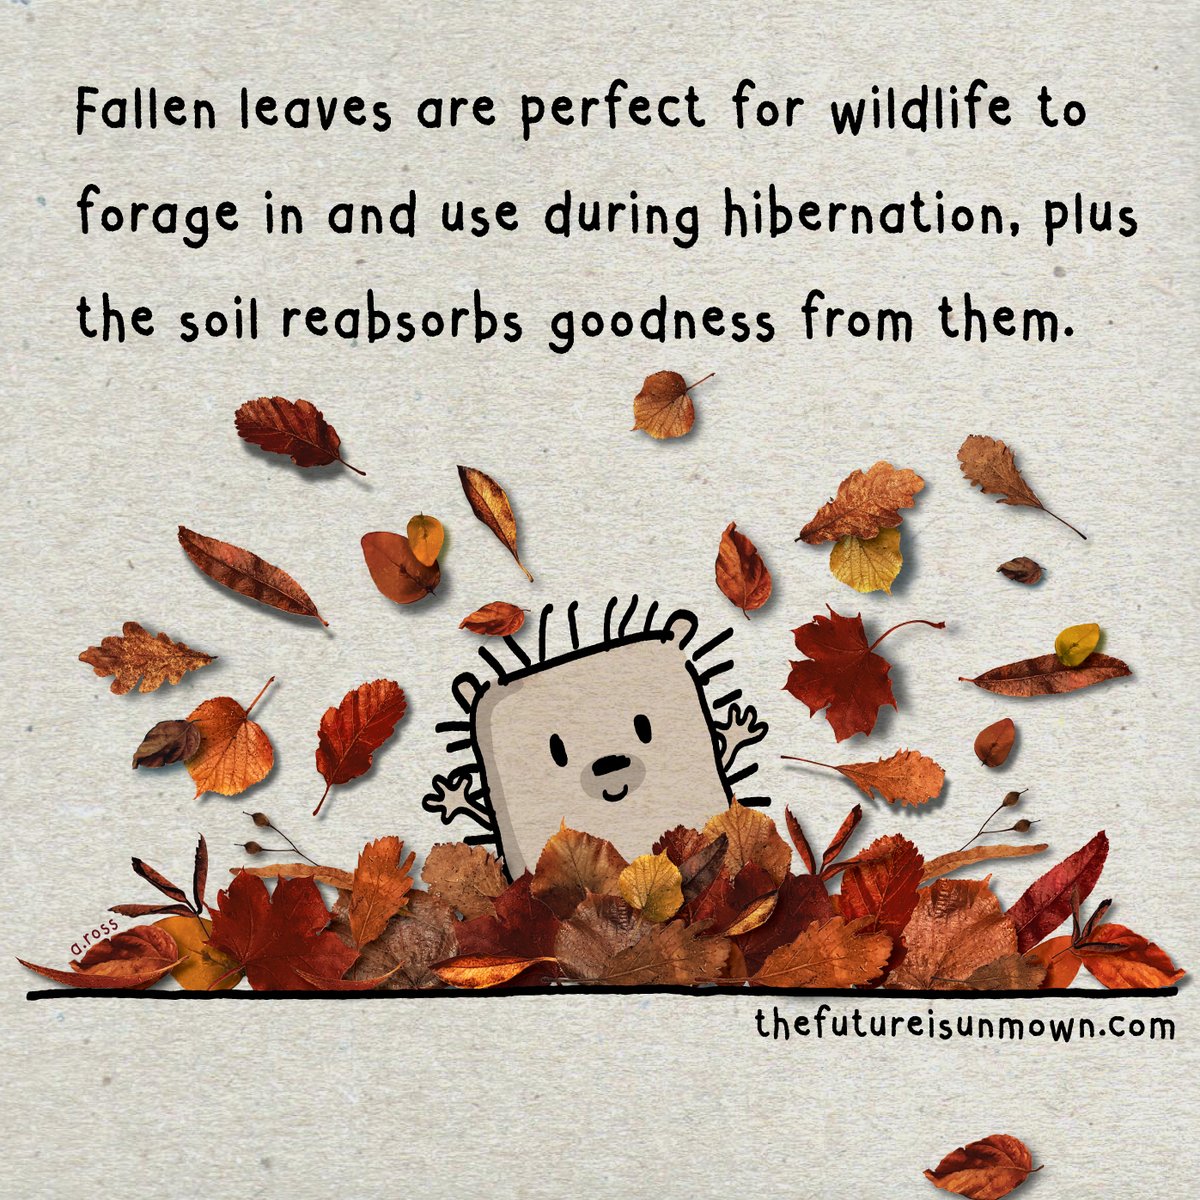 Have a tip top day 🧡

#LeaveTheLeaves #leaves #WildCorner #wildlife #nature #Autumn #WildlifeGarden #hedgehogs #HedgehogNest #HelpingHedgehogs #hibernation #foraging #UKbirds #thefutureisunmown #NewDesign #new